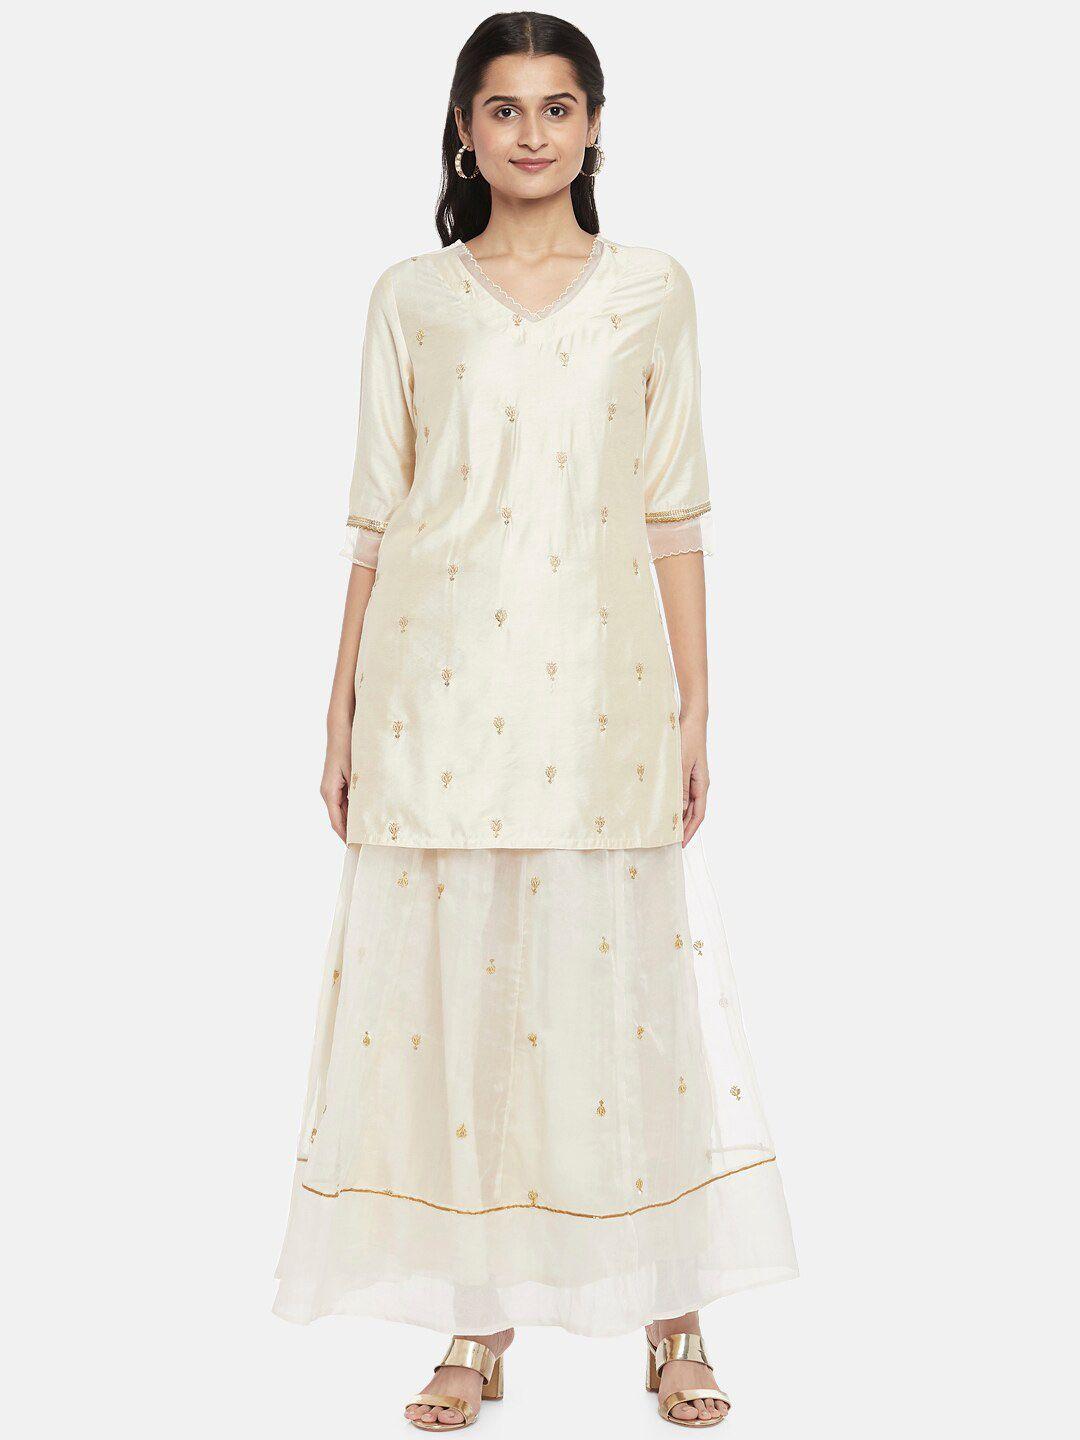 rangmanch by pantaloons women off white regular kurti with skirt & with dupatta